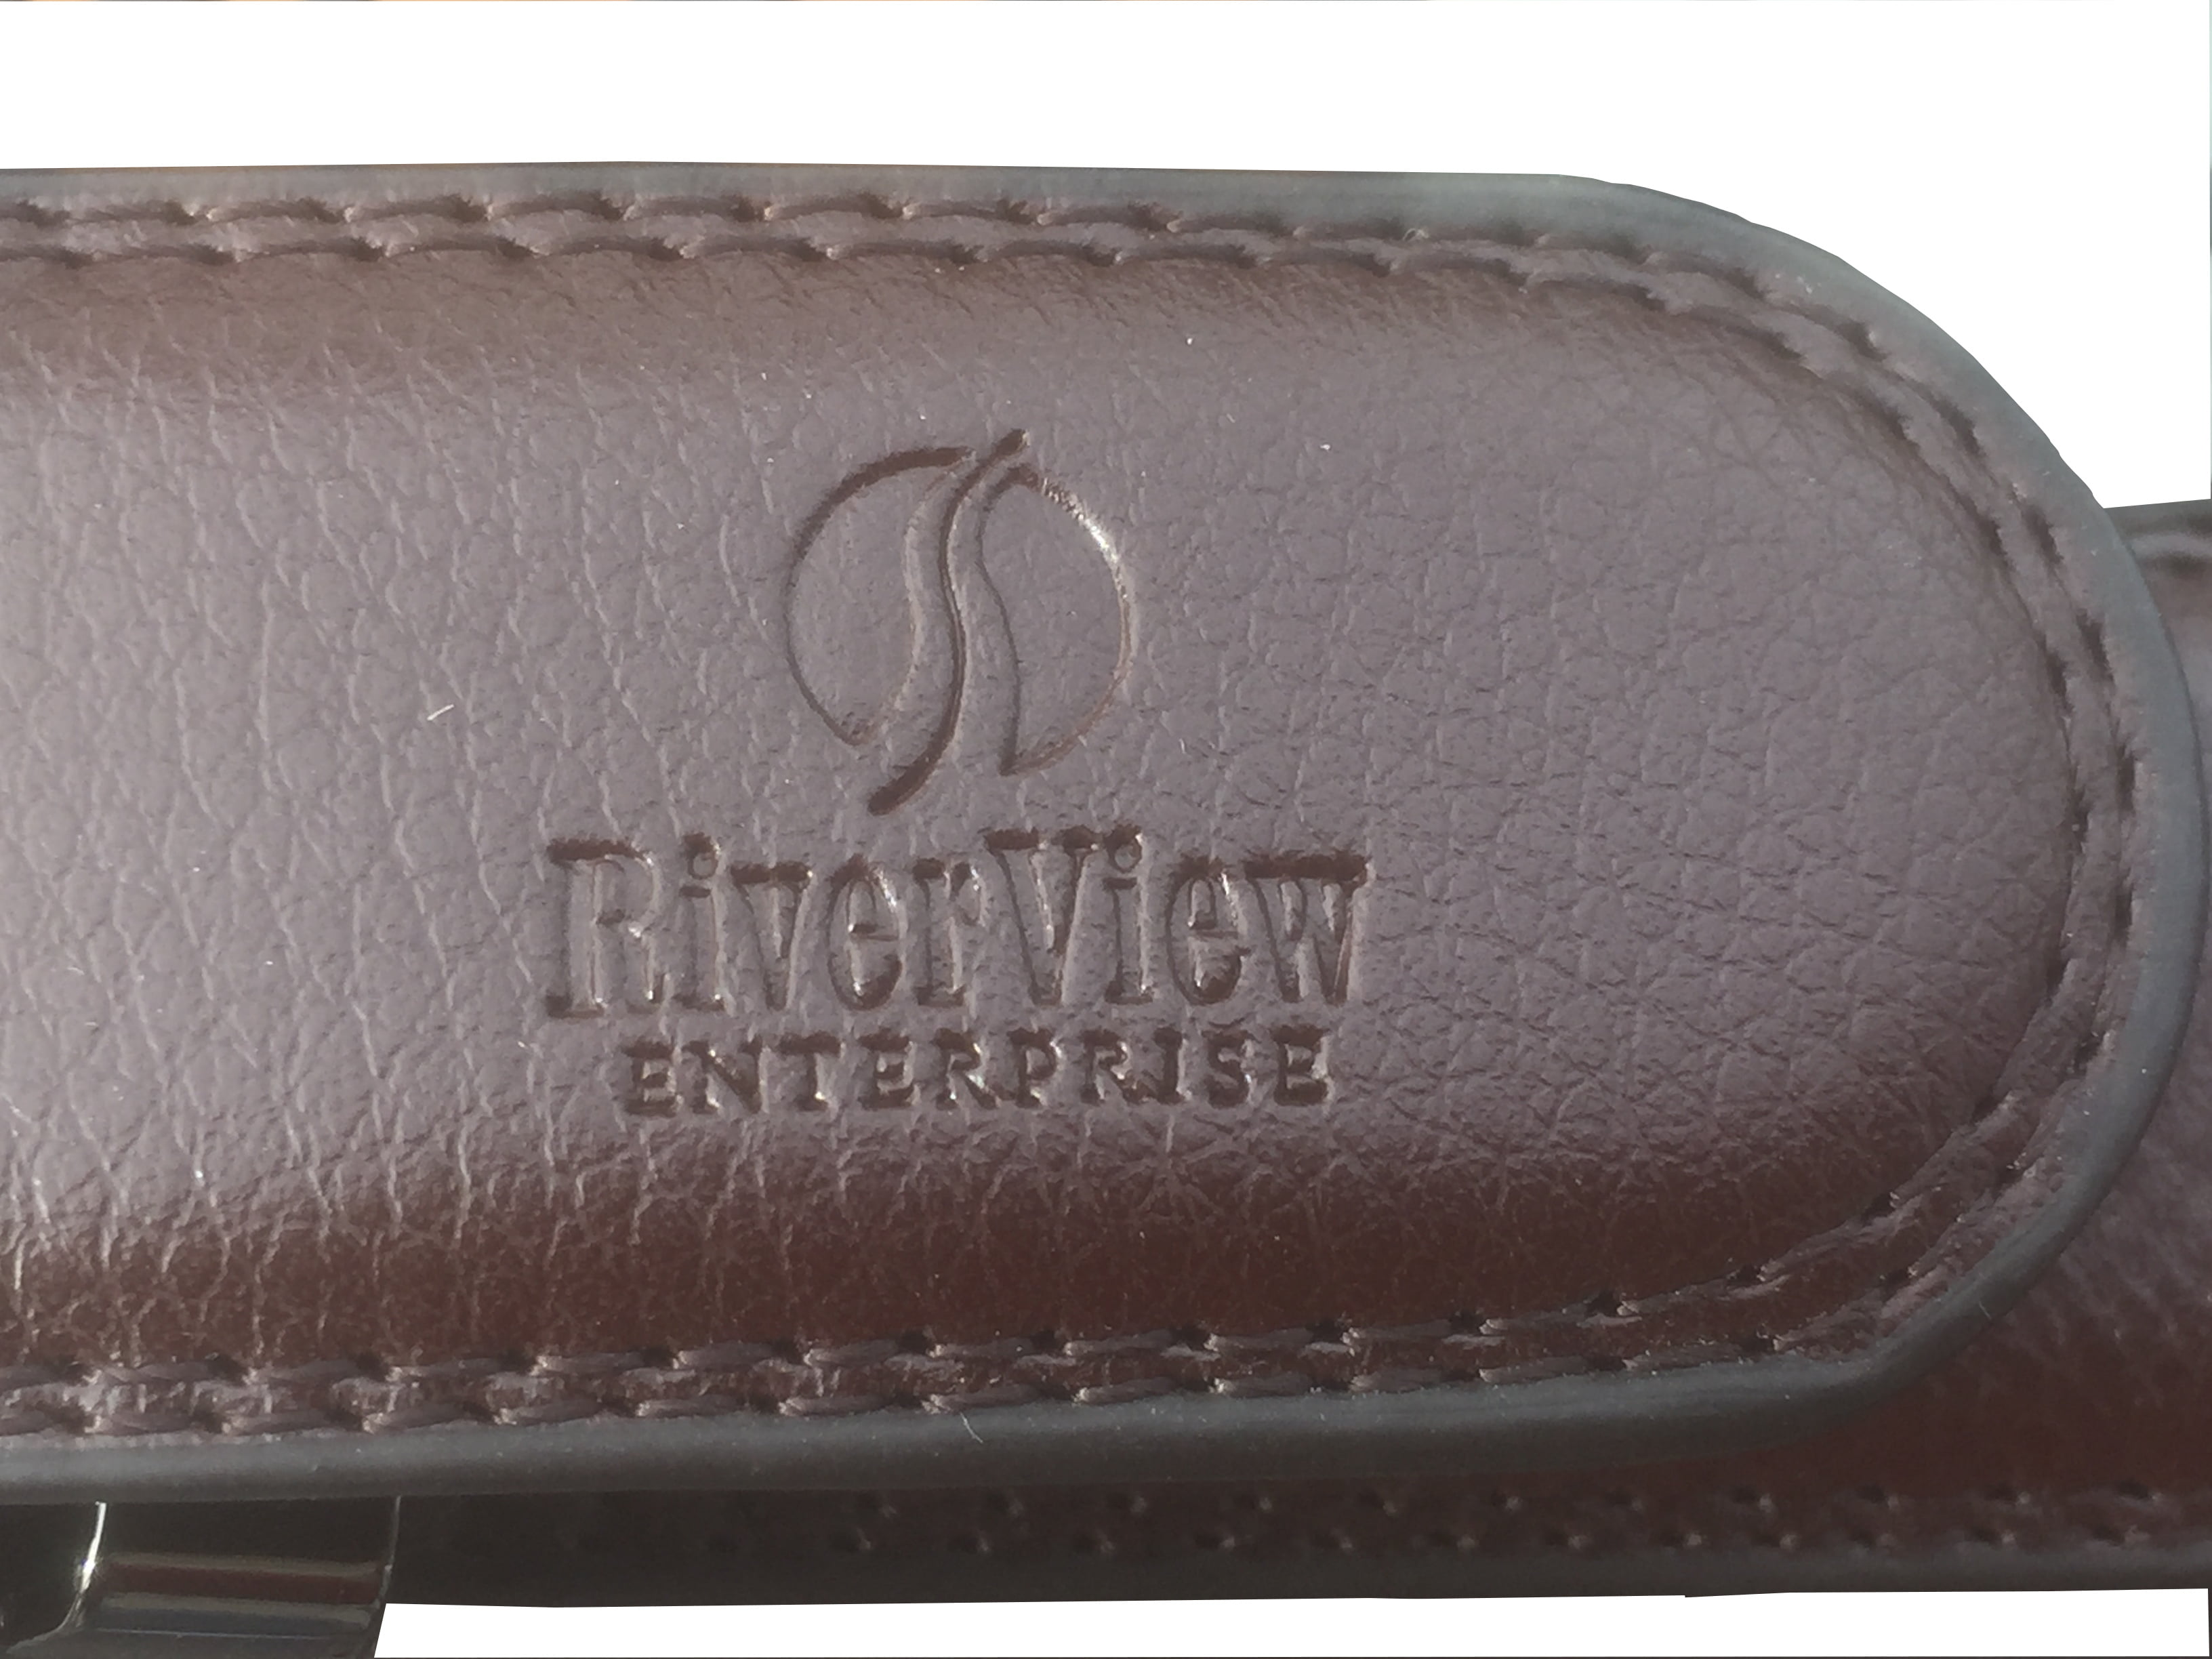  RiverView Enterprise Black Leather Ratchet Dress Belt